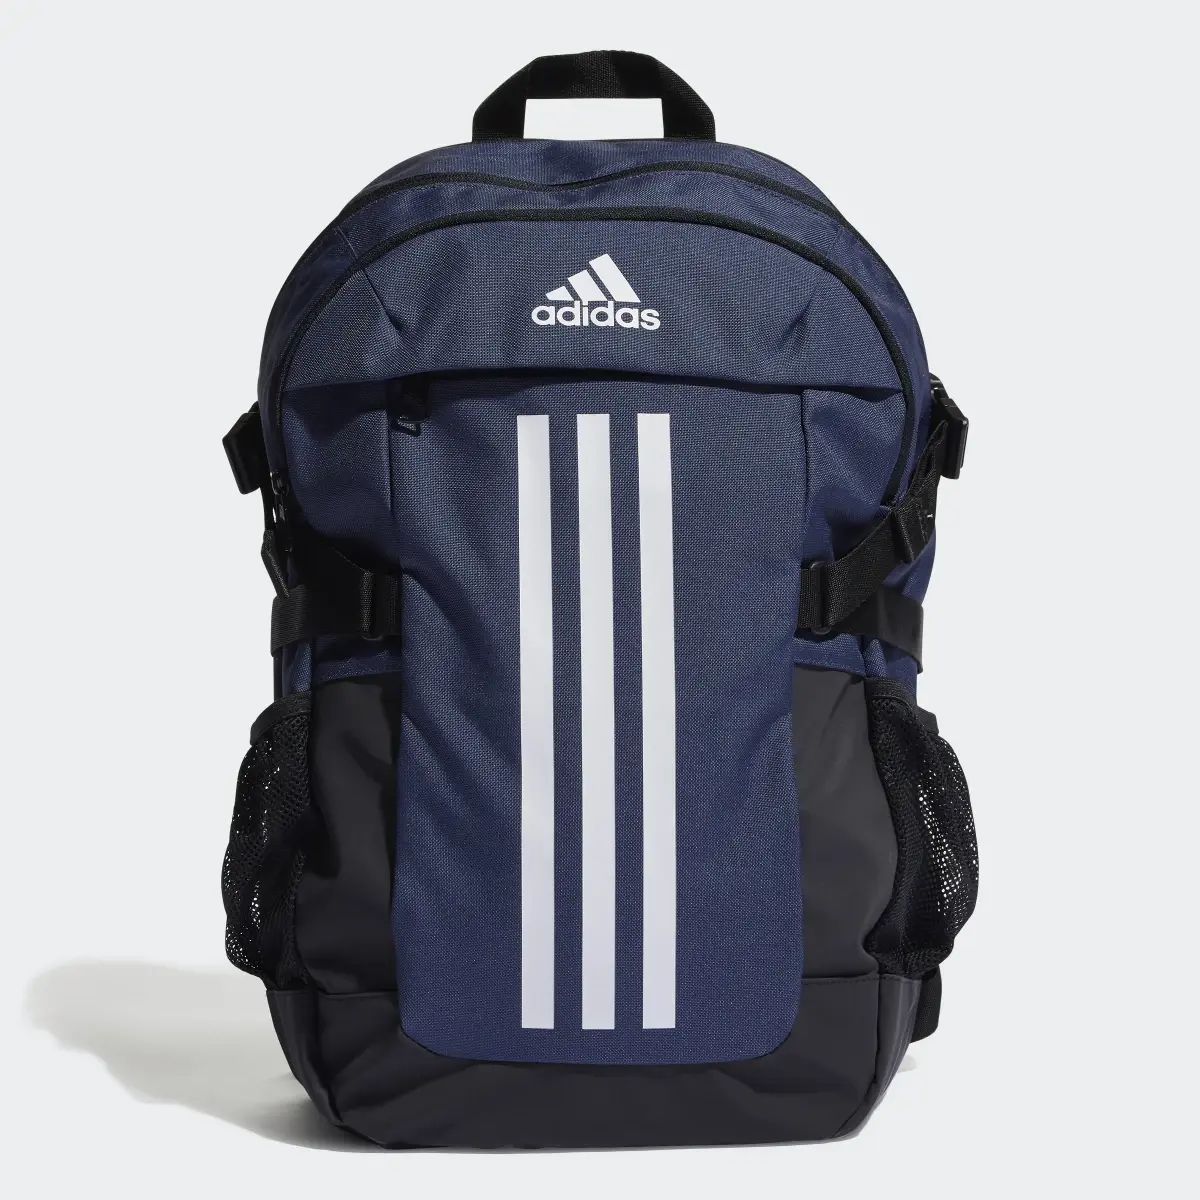 Adidas Power VI Backpack. 2